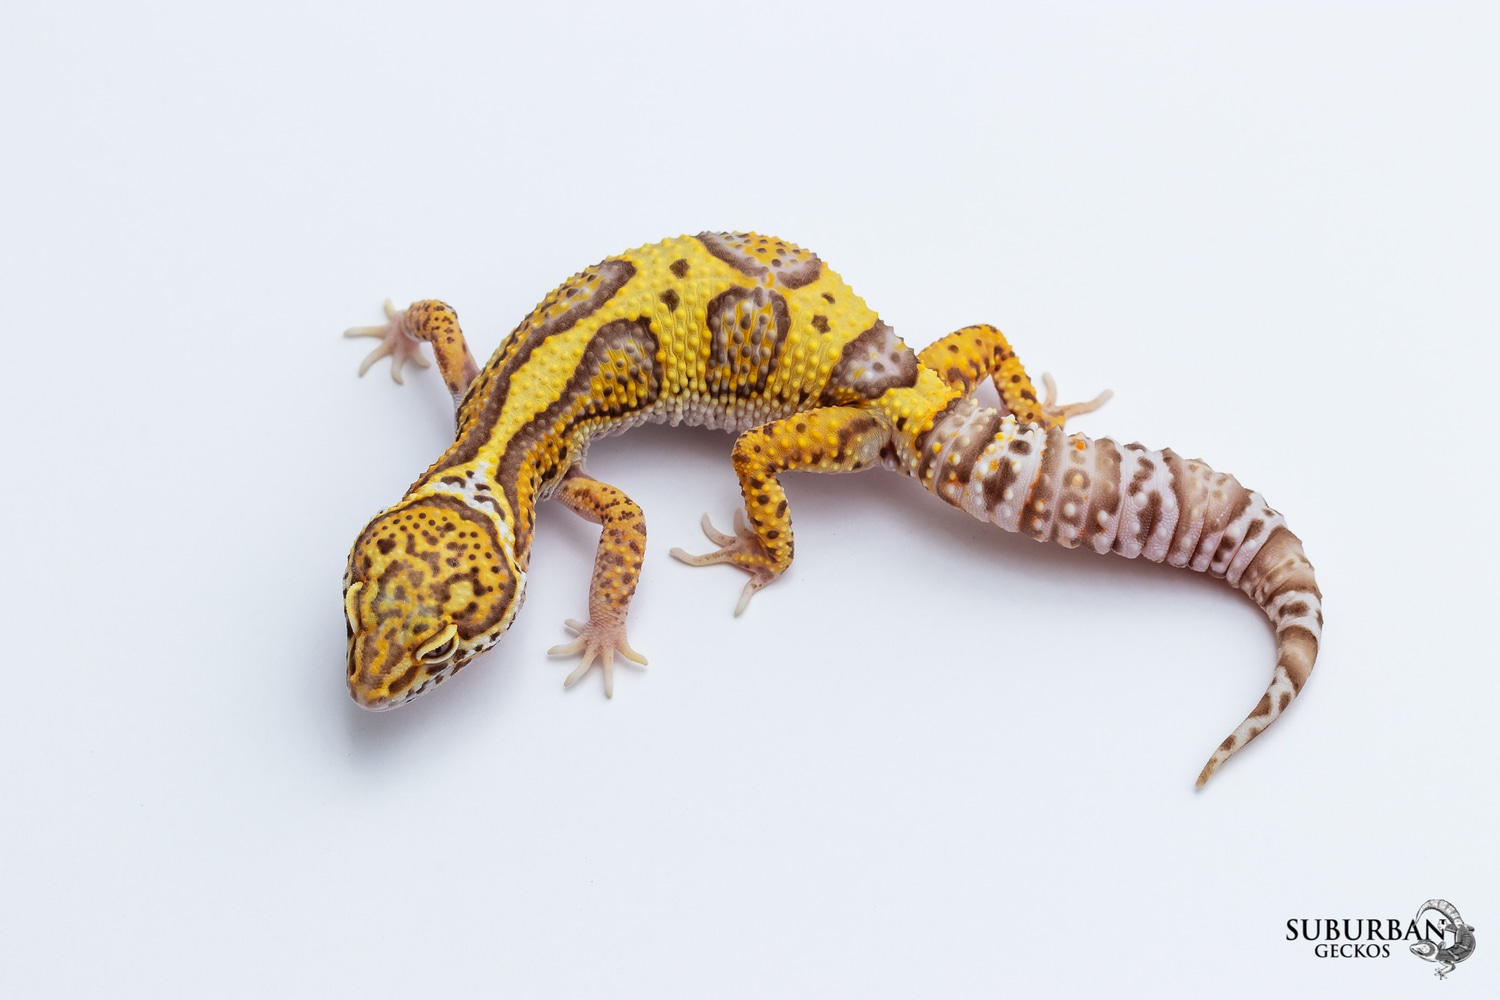 Gem Snow Radar Leopard Gecko by Suburban Geckos